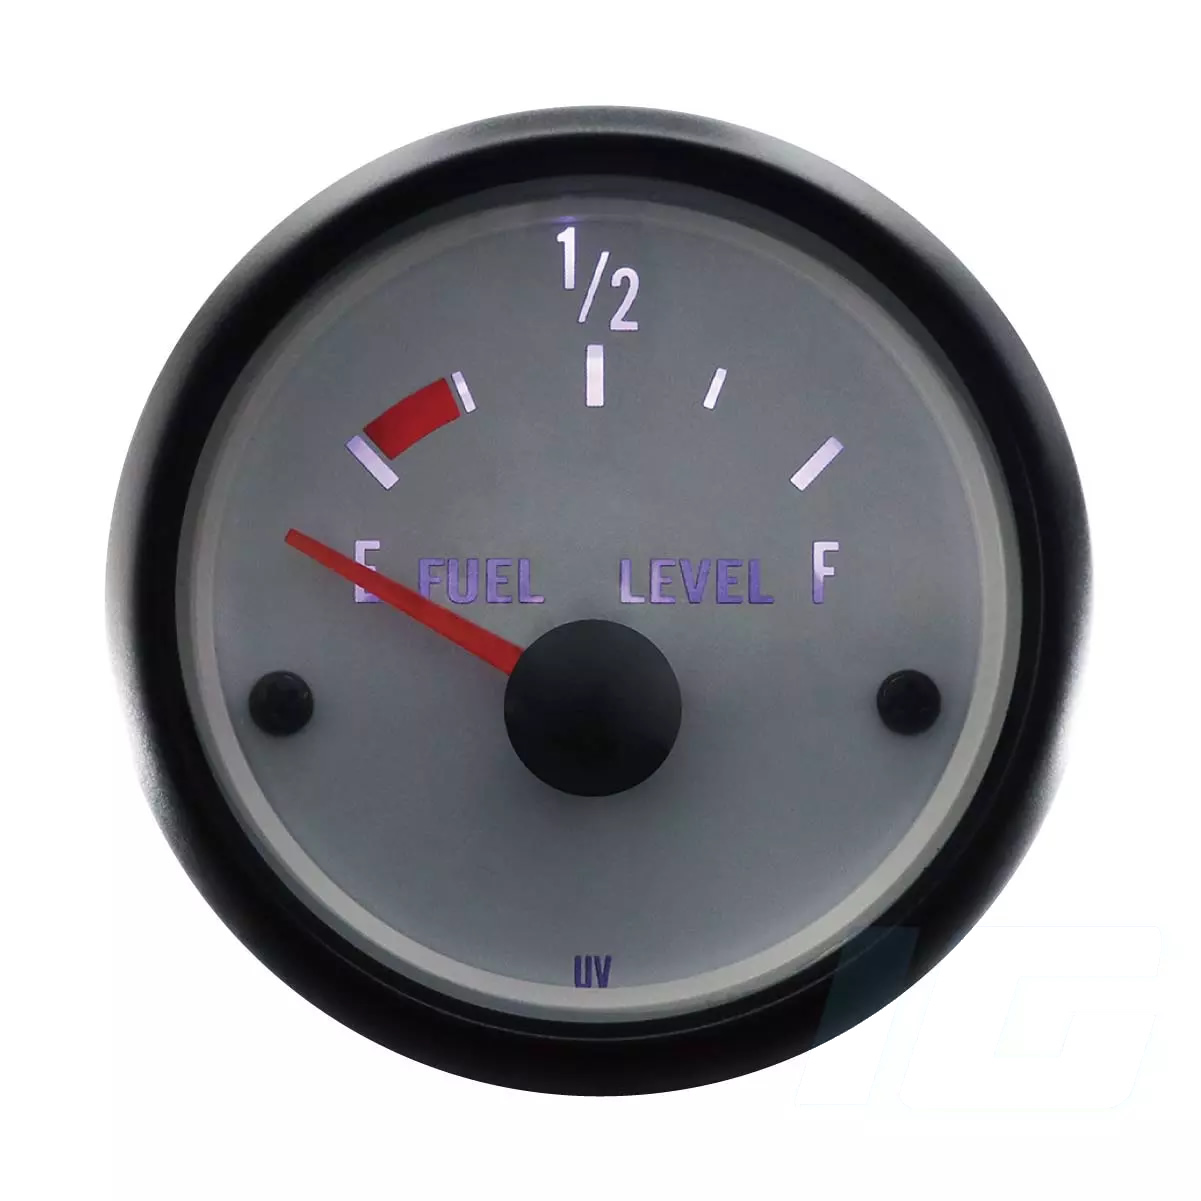 marine fuel level gauge